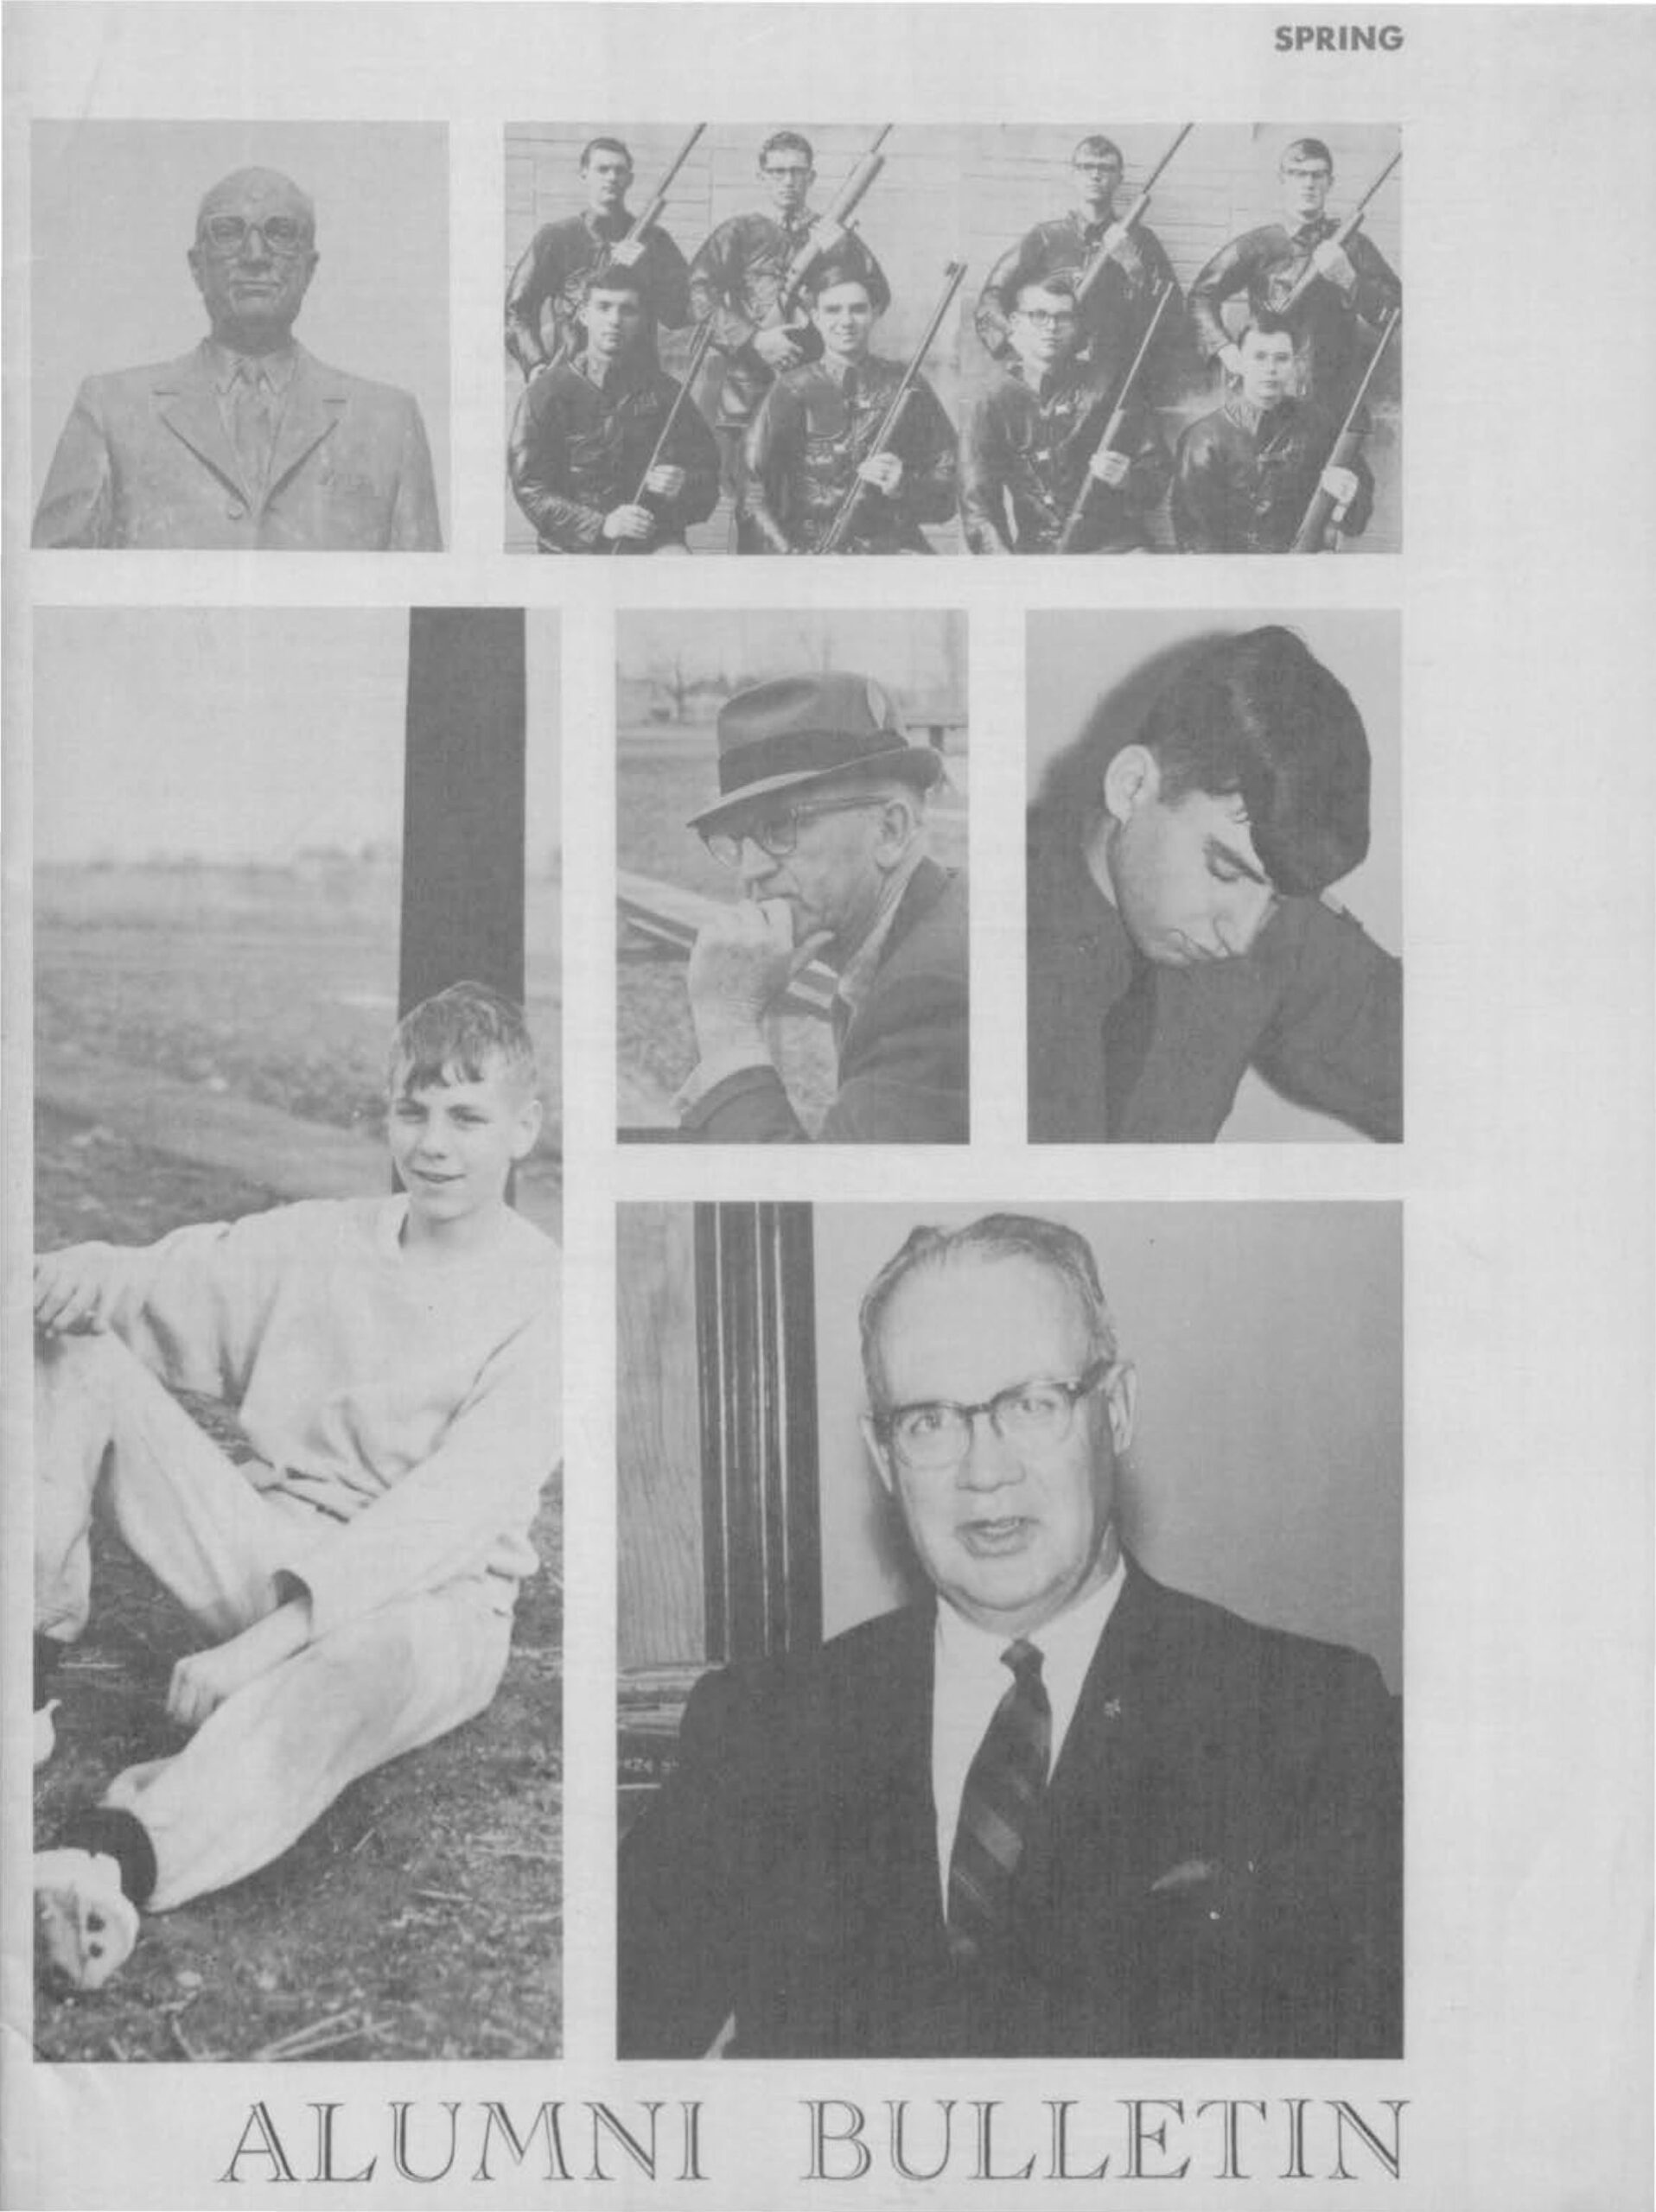 Alumni Bulletin Spring 1969